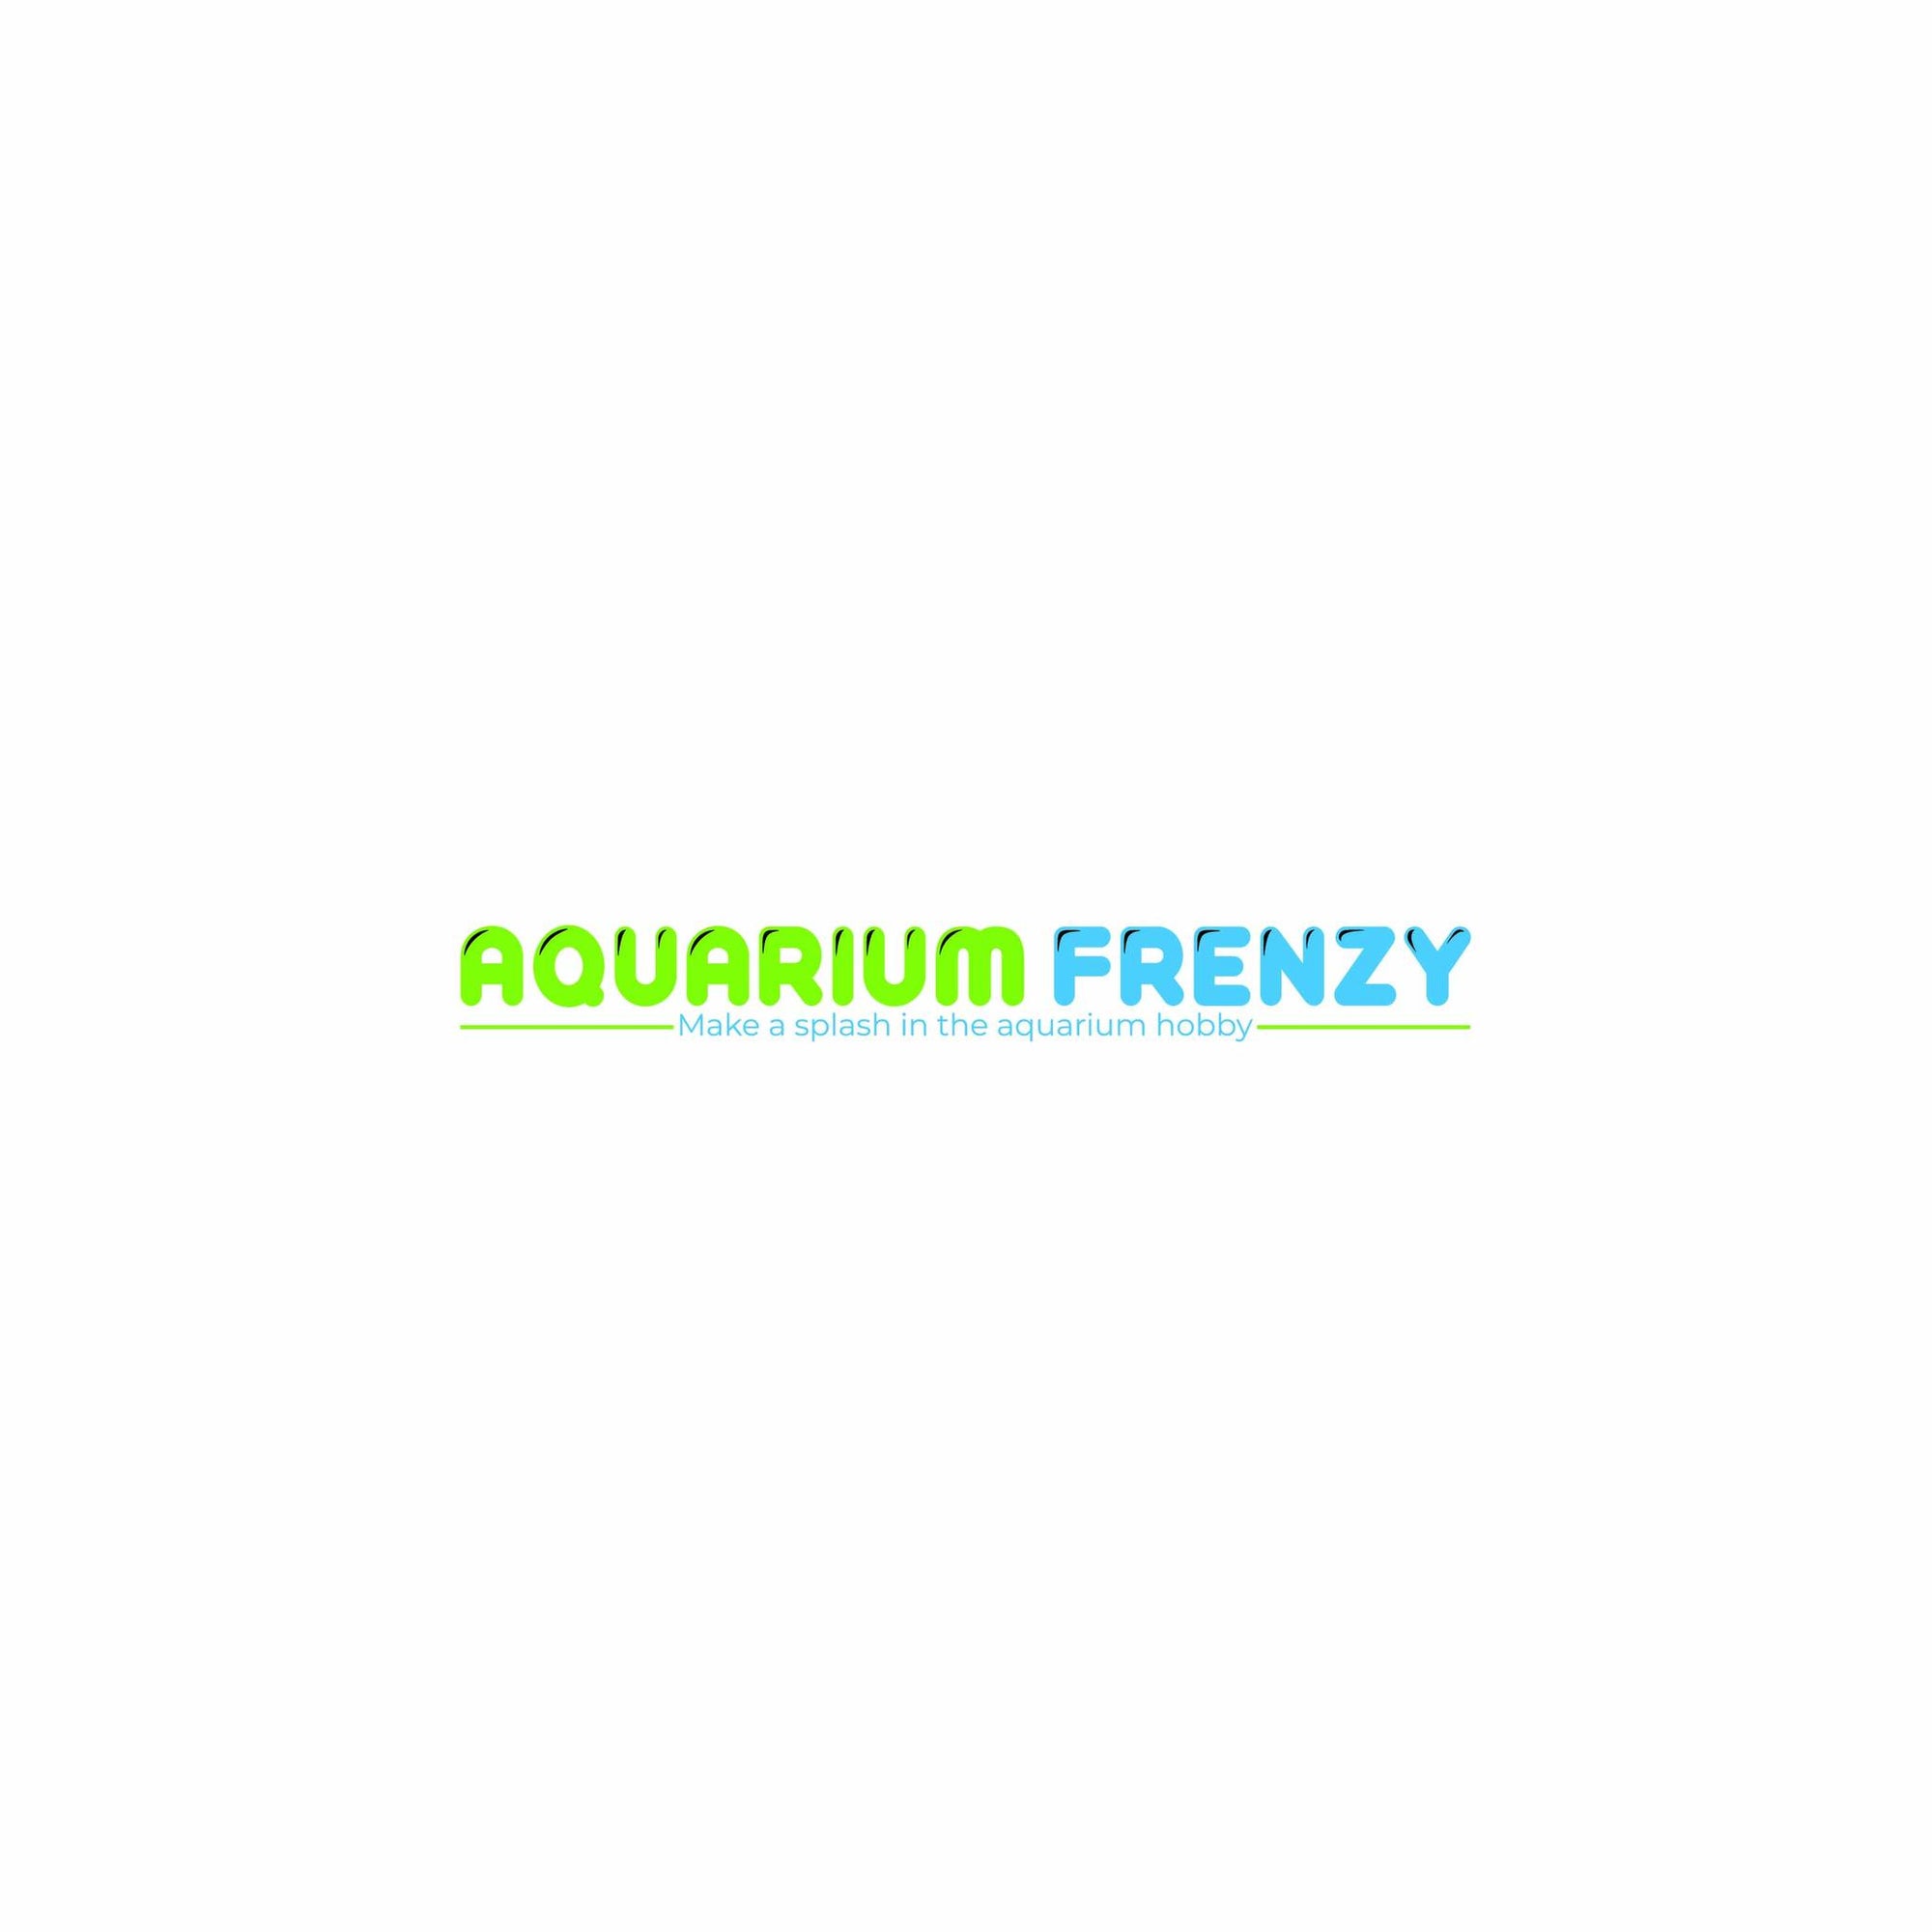 Are you aware of the Aquarium Frenzy?